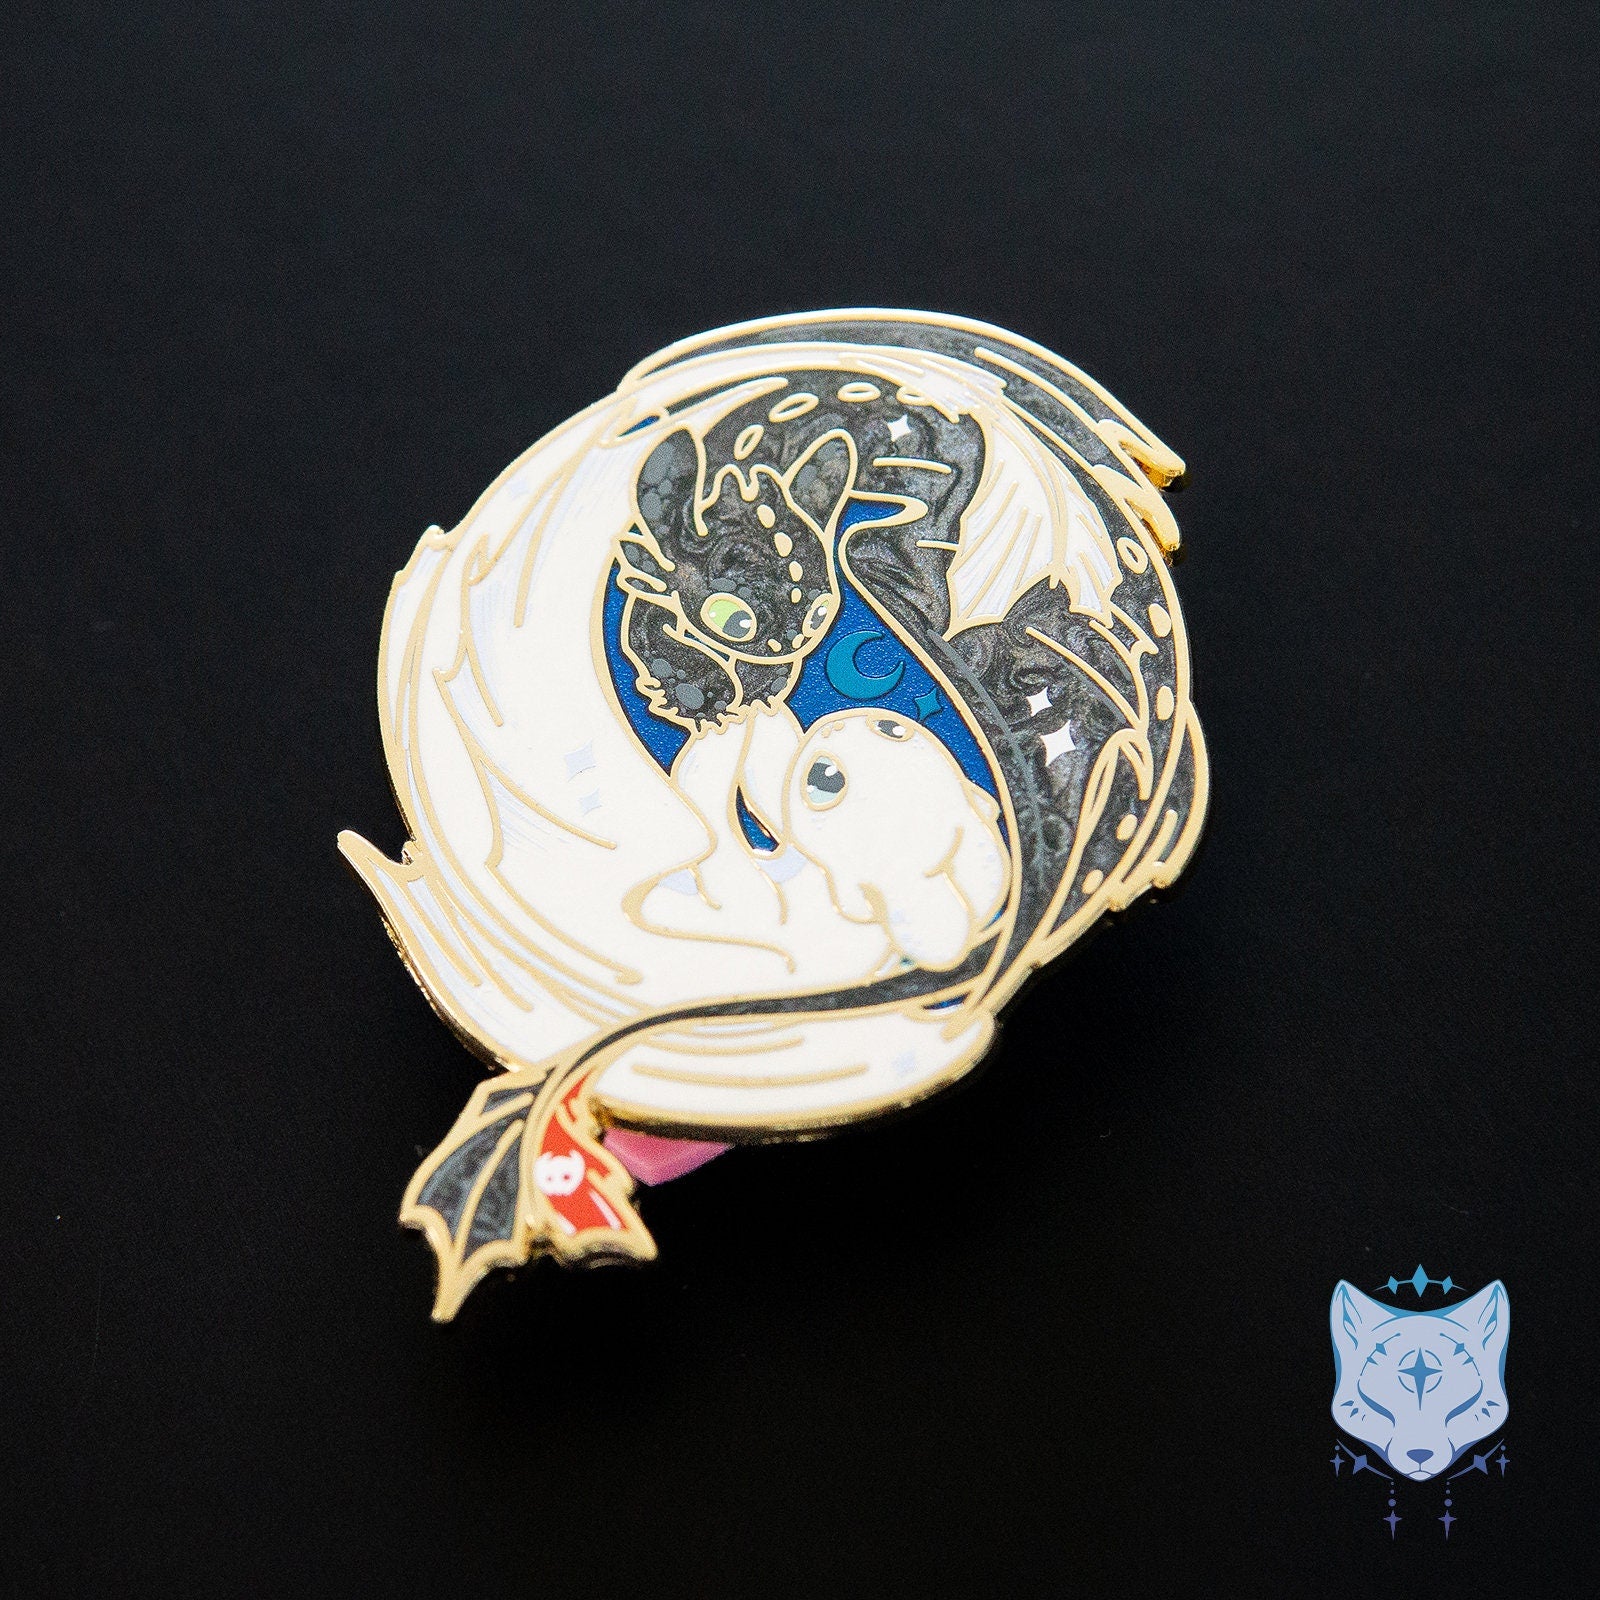 HTTYD "Flight of Dragons" - LE 100 Pearl Swirl 2.5" pin